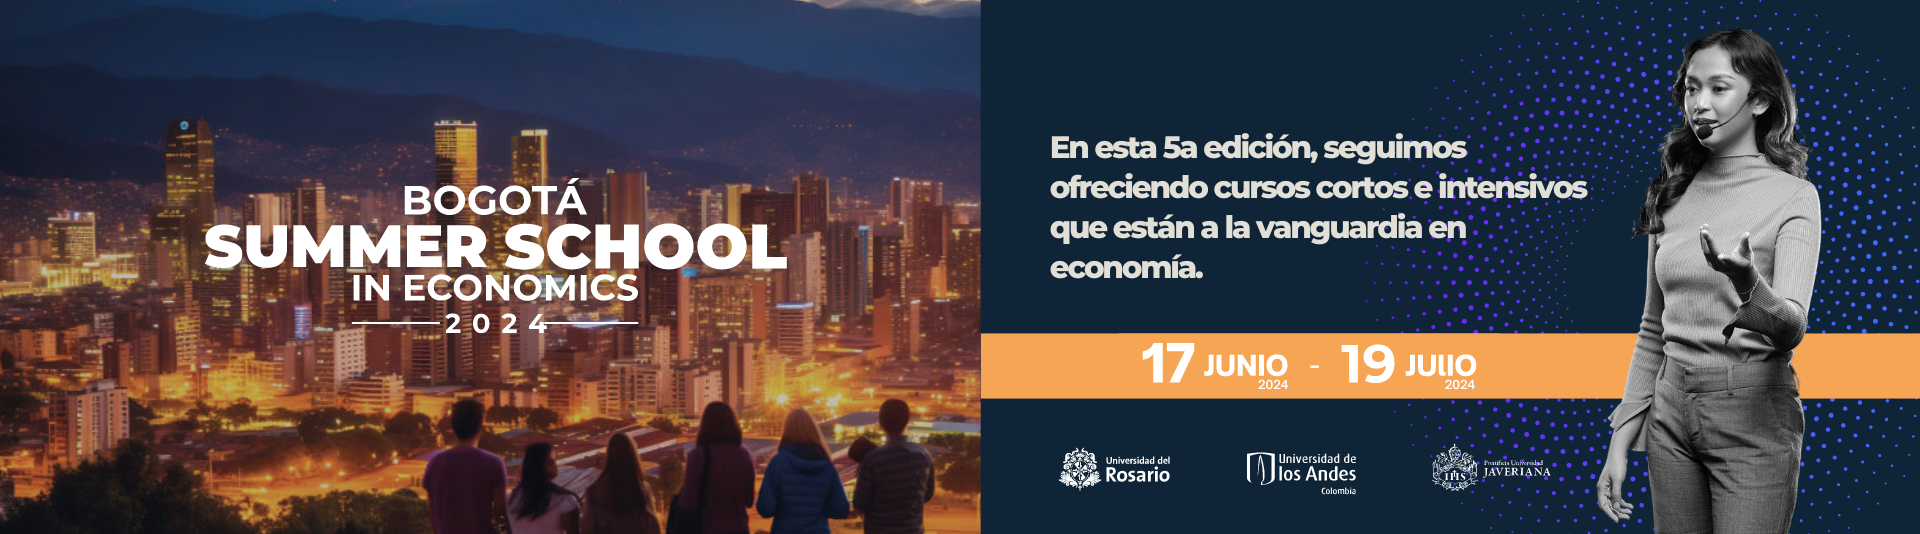 Bogotá Summer School in Economics 2024